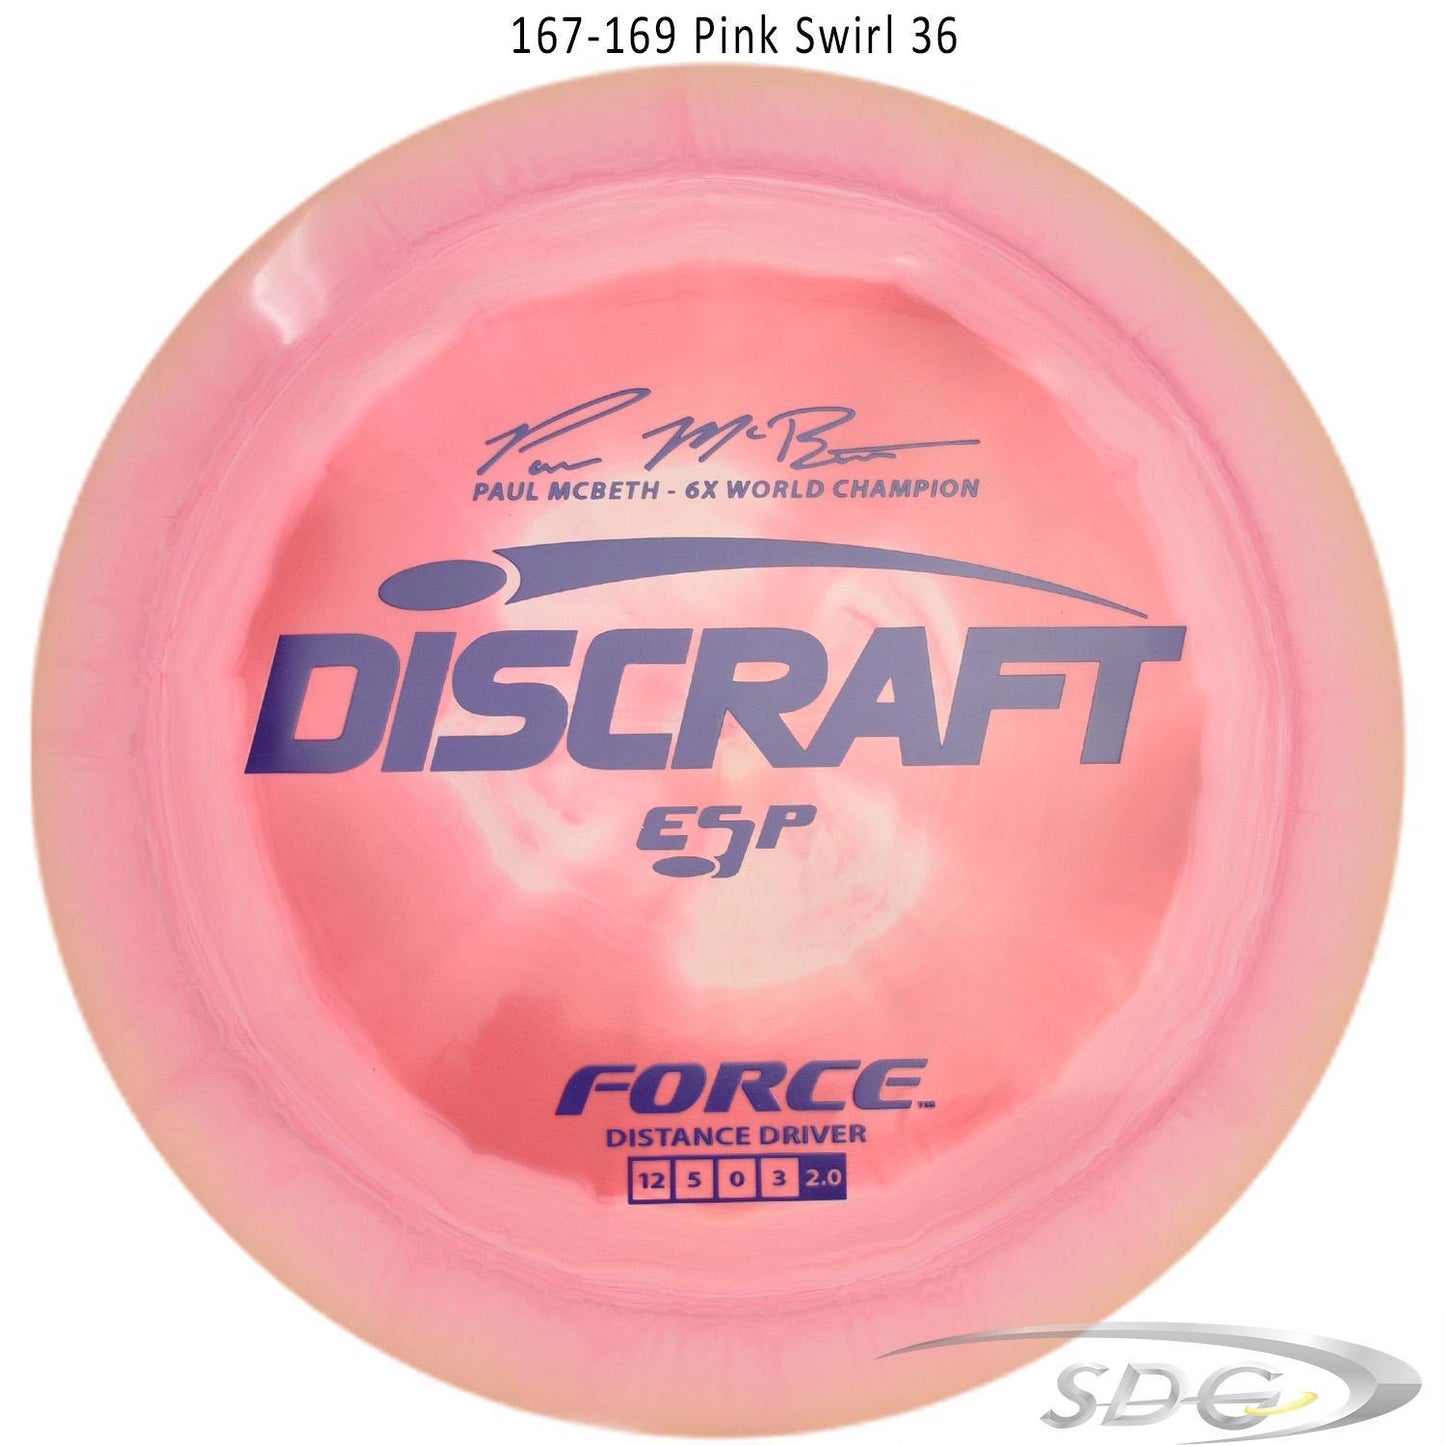 discraft-esp-force-6x-paul-mcbeth-signature-disc-golf-distance-driver 167-169 Pink Swirl 36